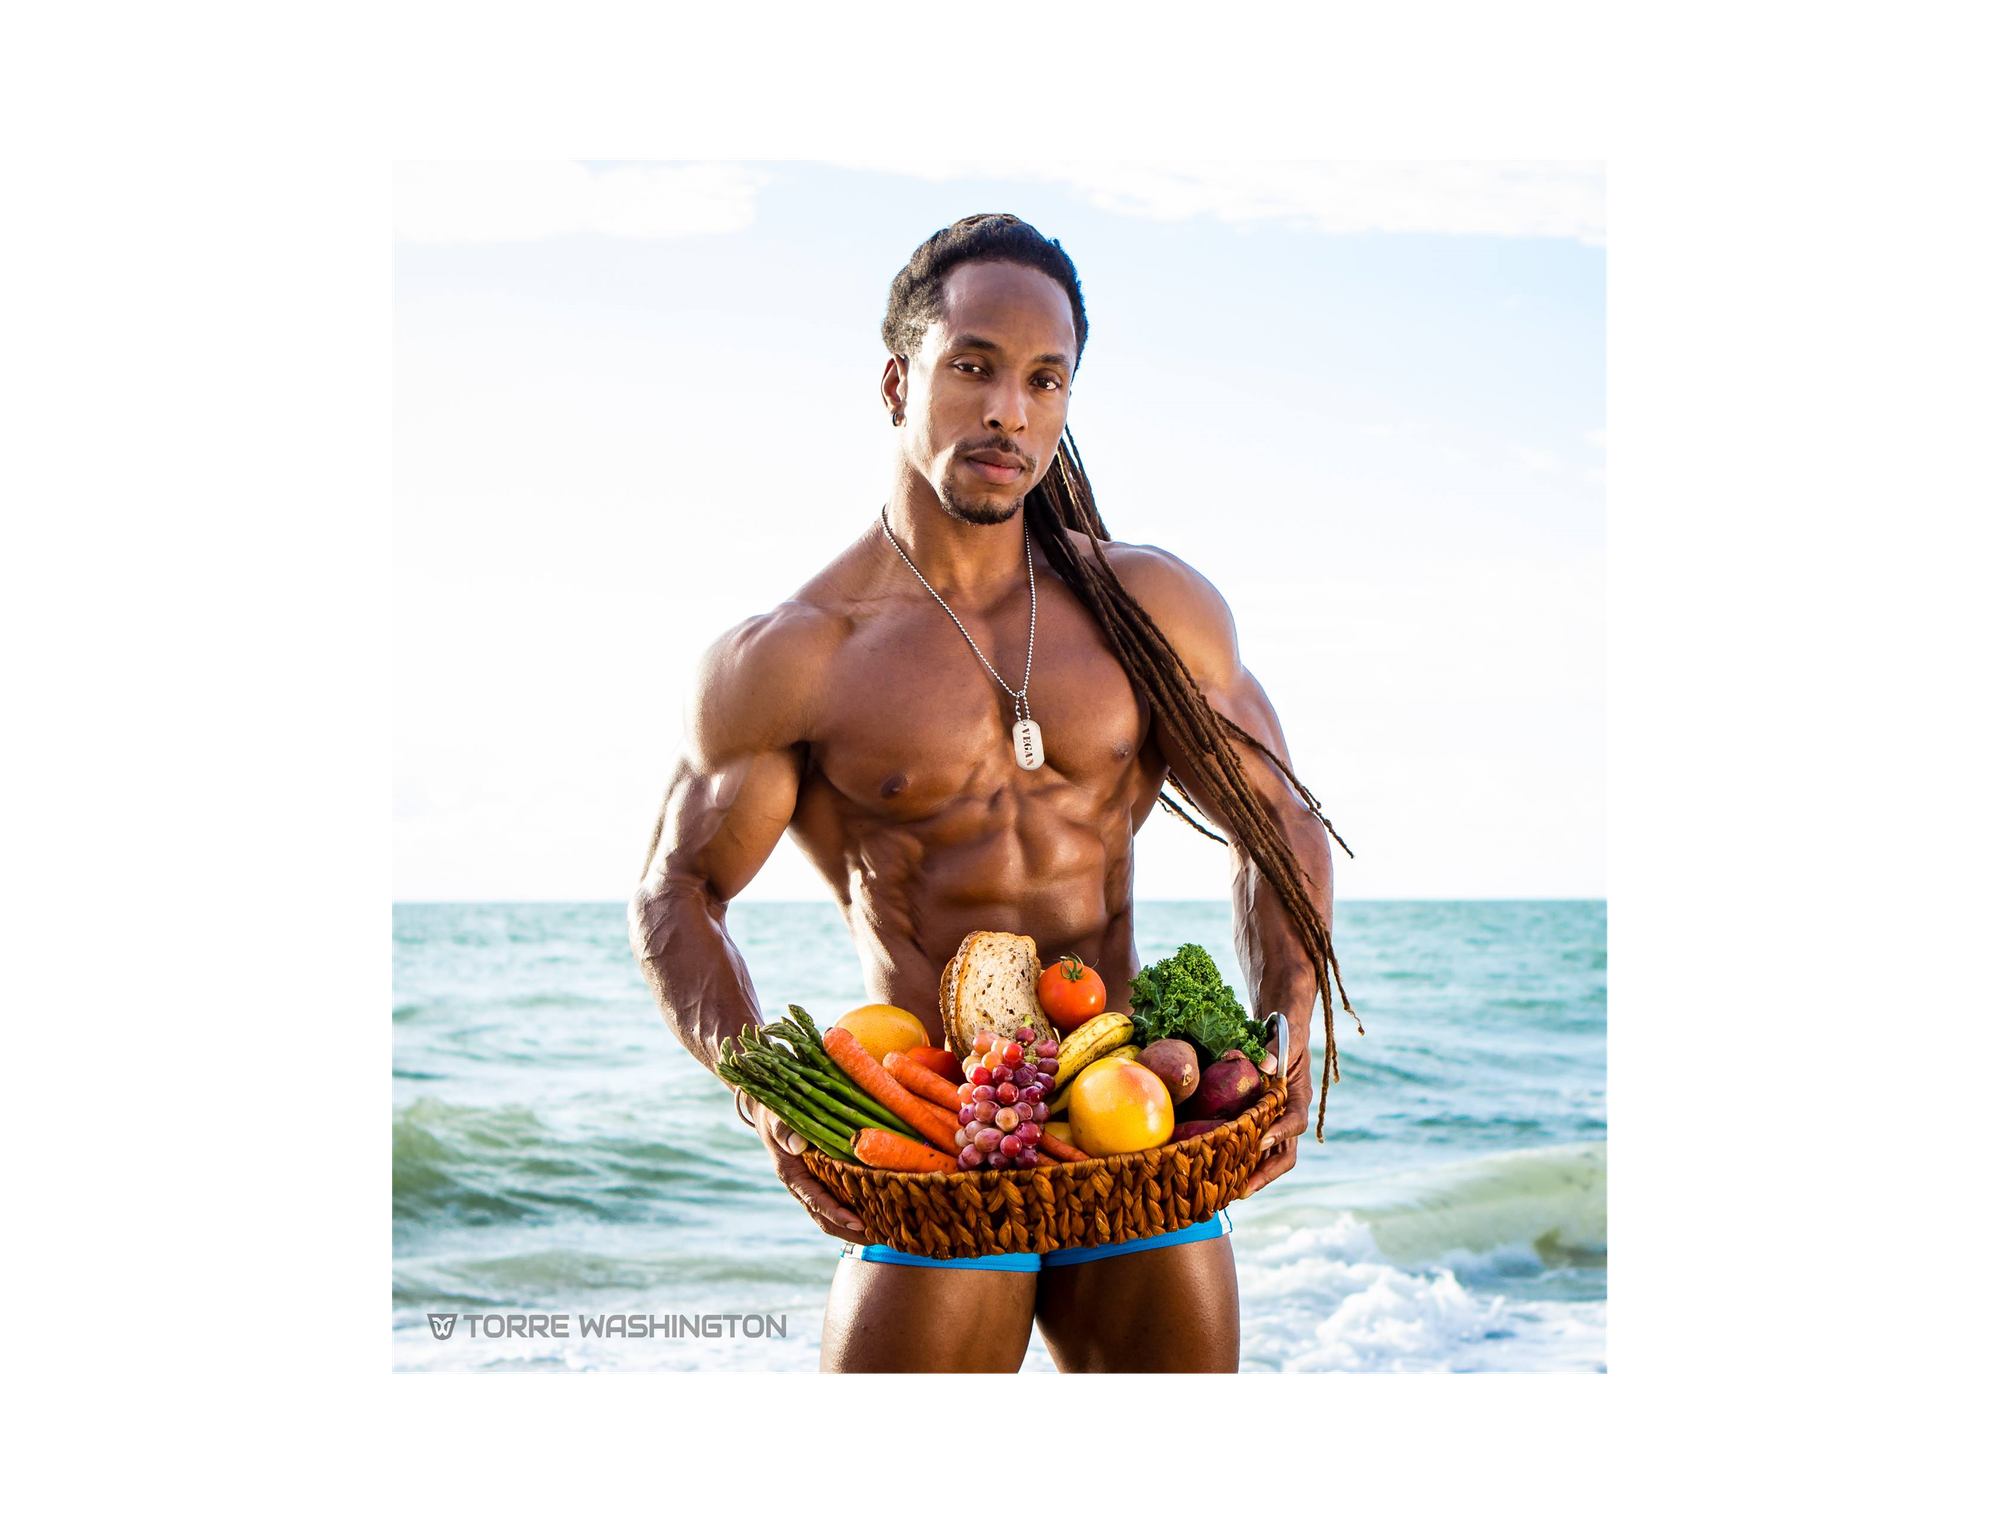 Torre Washington: The Vegan Bodybuilder Shaping Modern Fitness